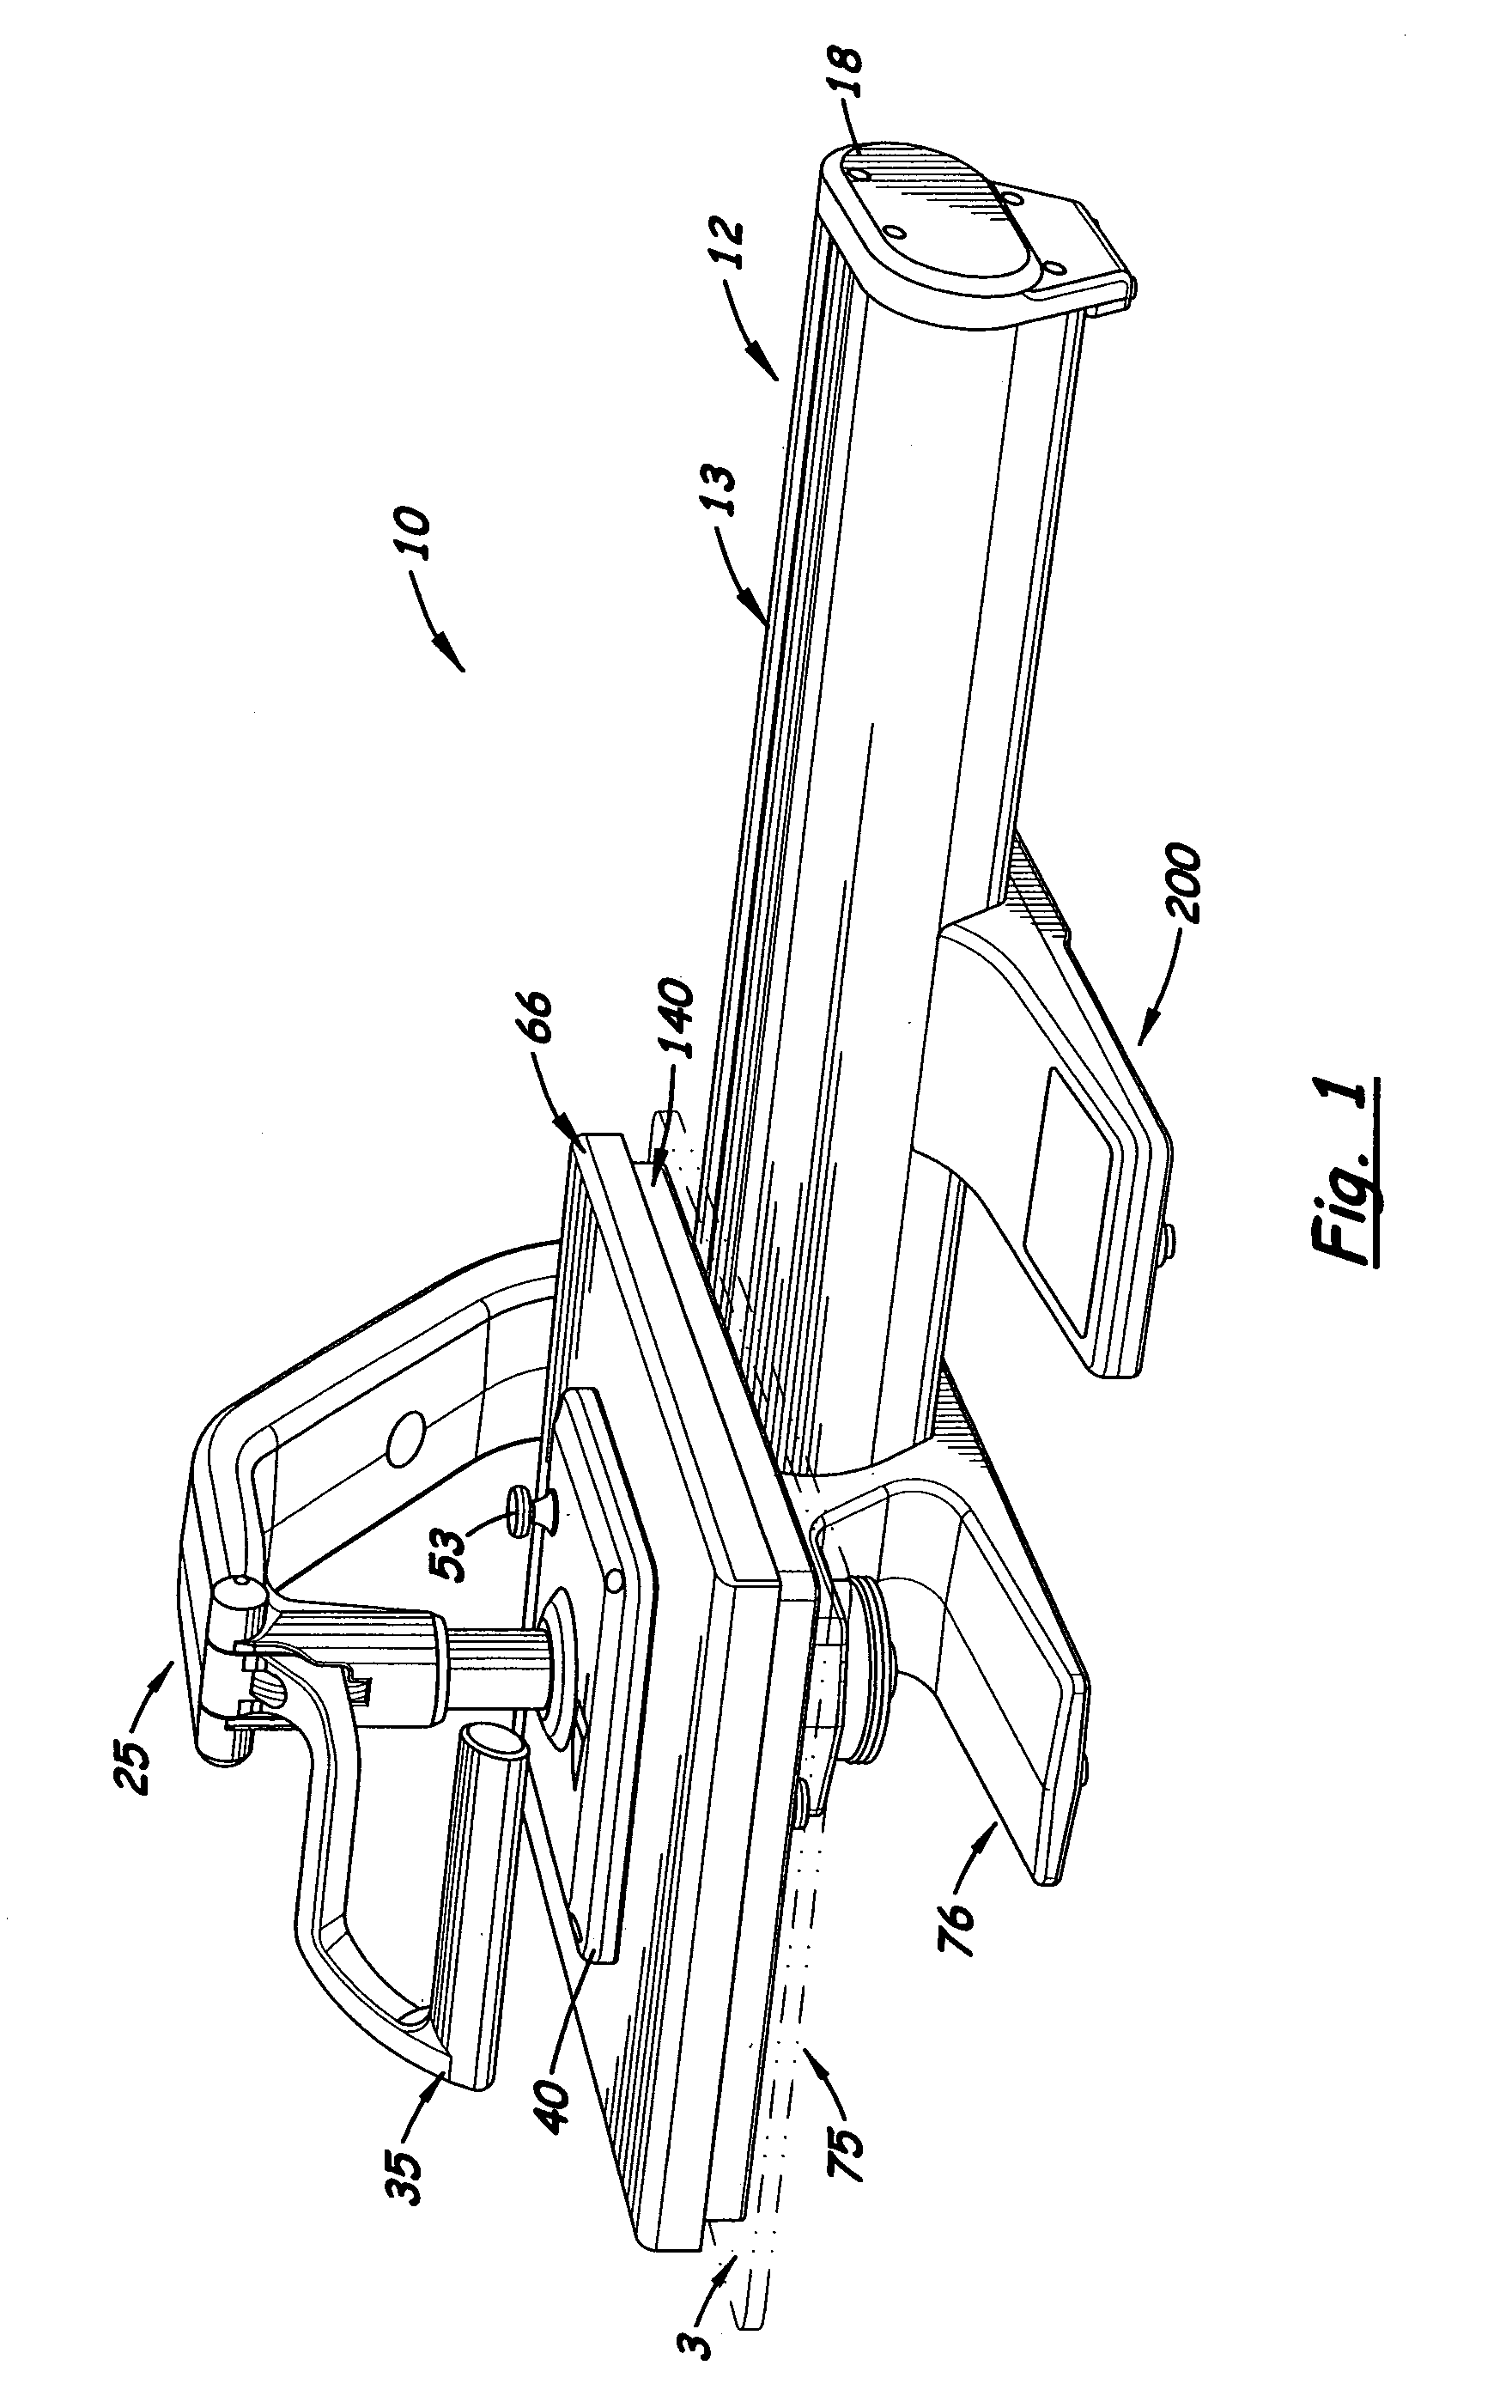 Modular lateral heat press machine